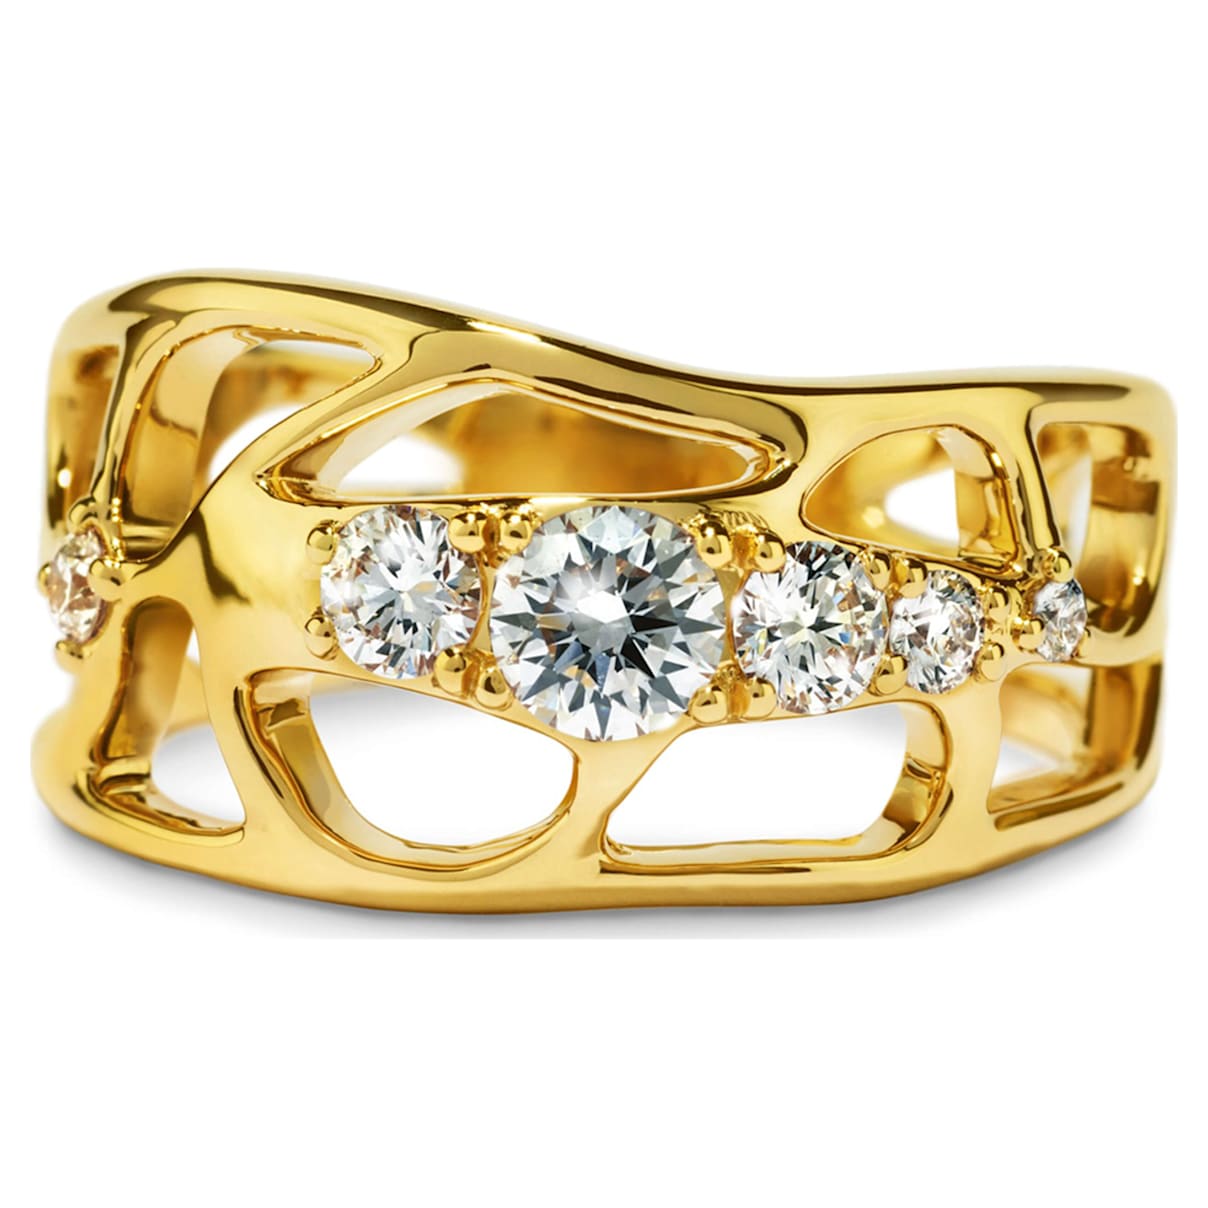 Diama 18K Lace Narrow Ring, Swarovski Created Diamonds, 18K Yellow Gold, Size 55